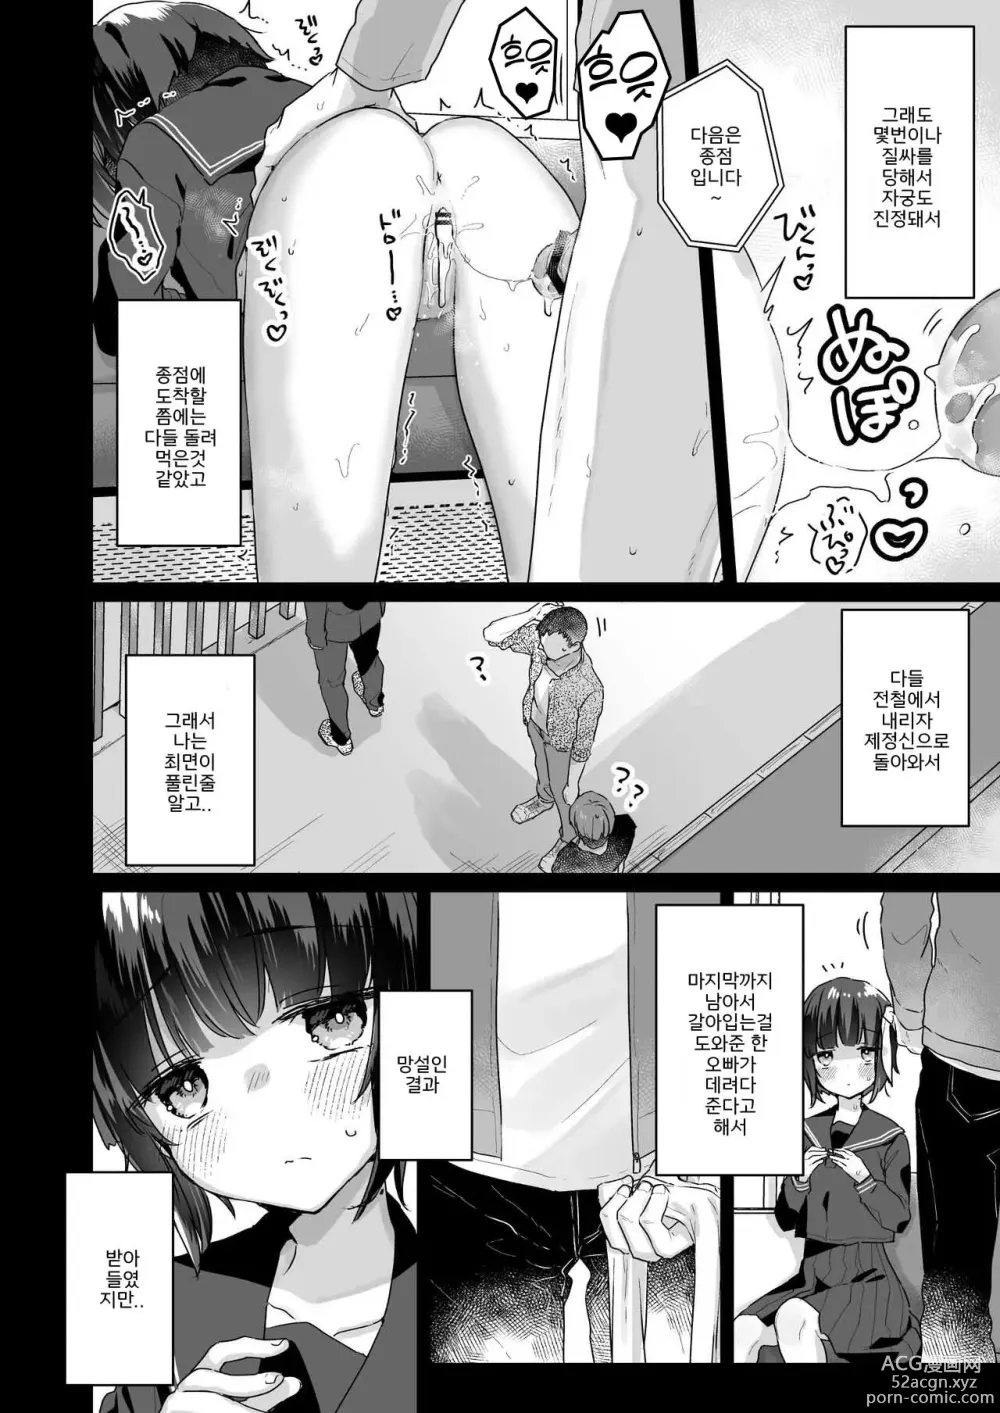 Page 5 of doujinshi 되고싶지 않았는데 서큐버스 03